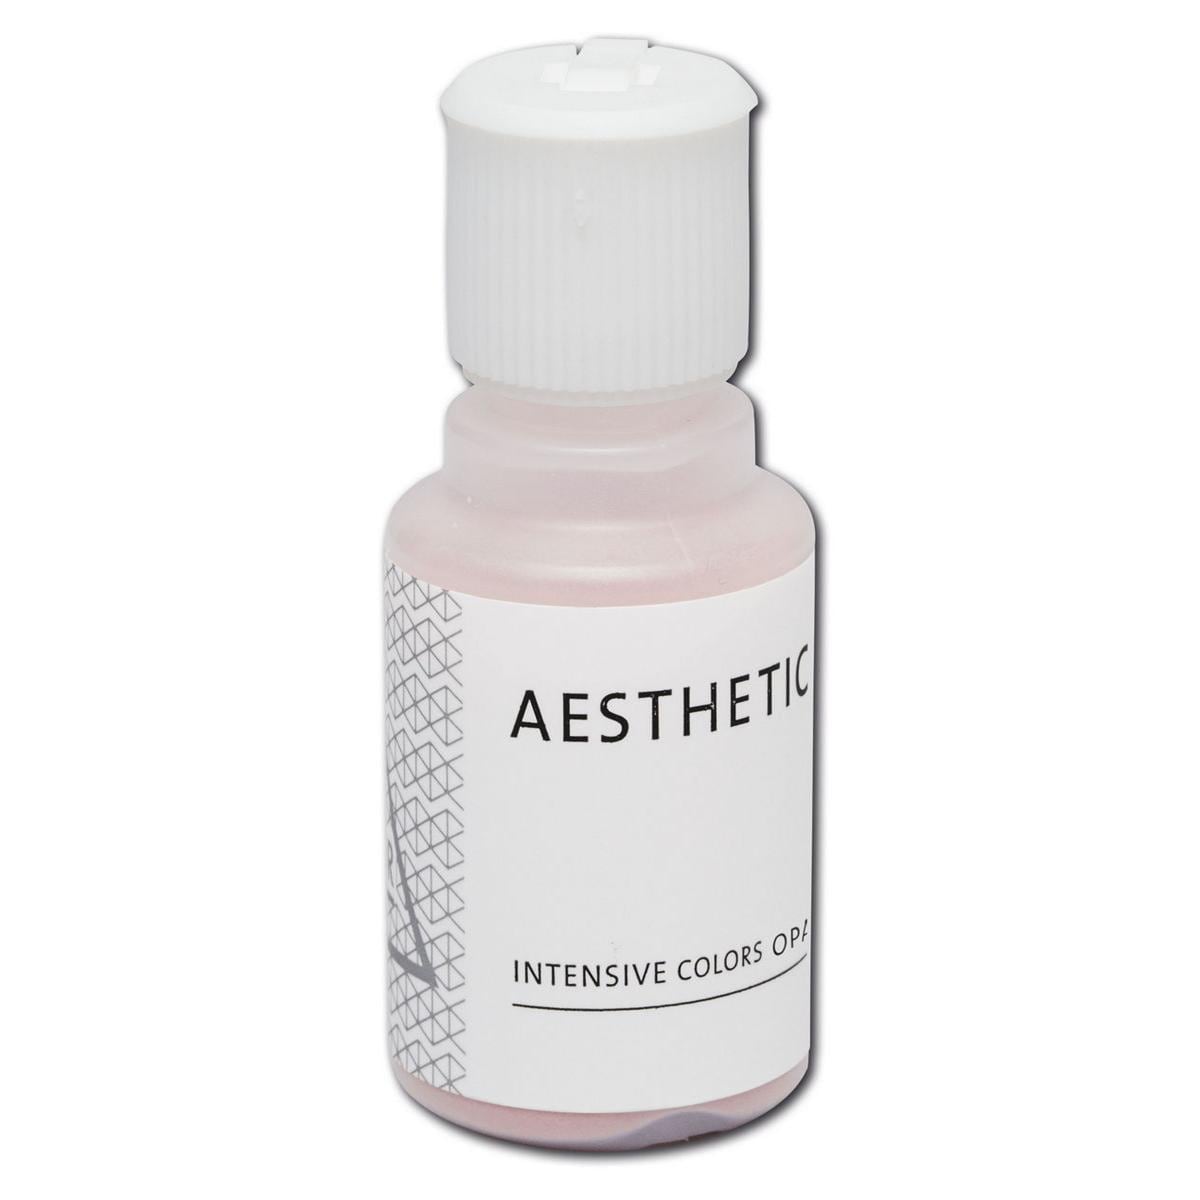 Aesthetic Intensiv Opaque - Flasche 15 g